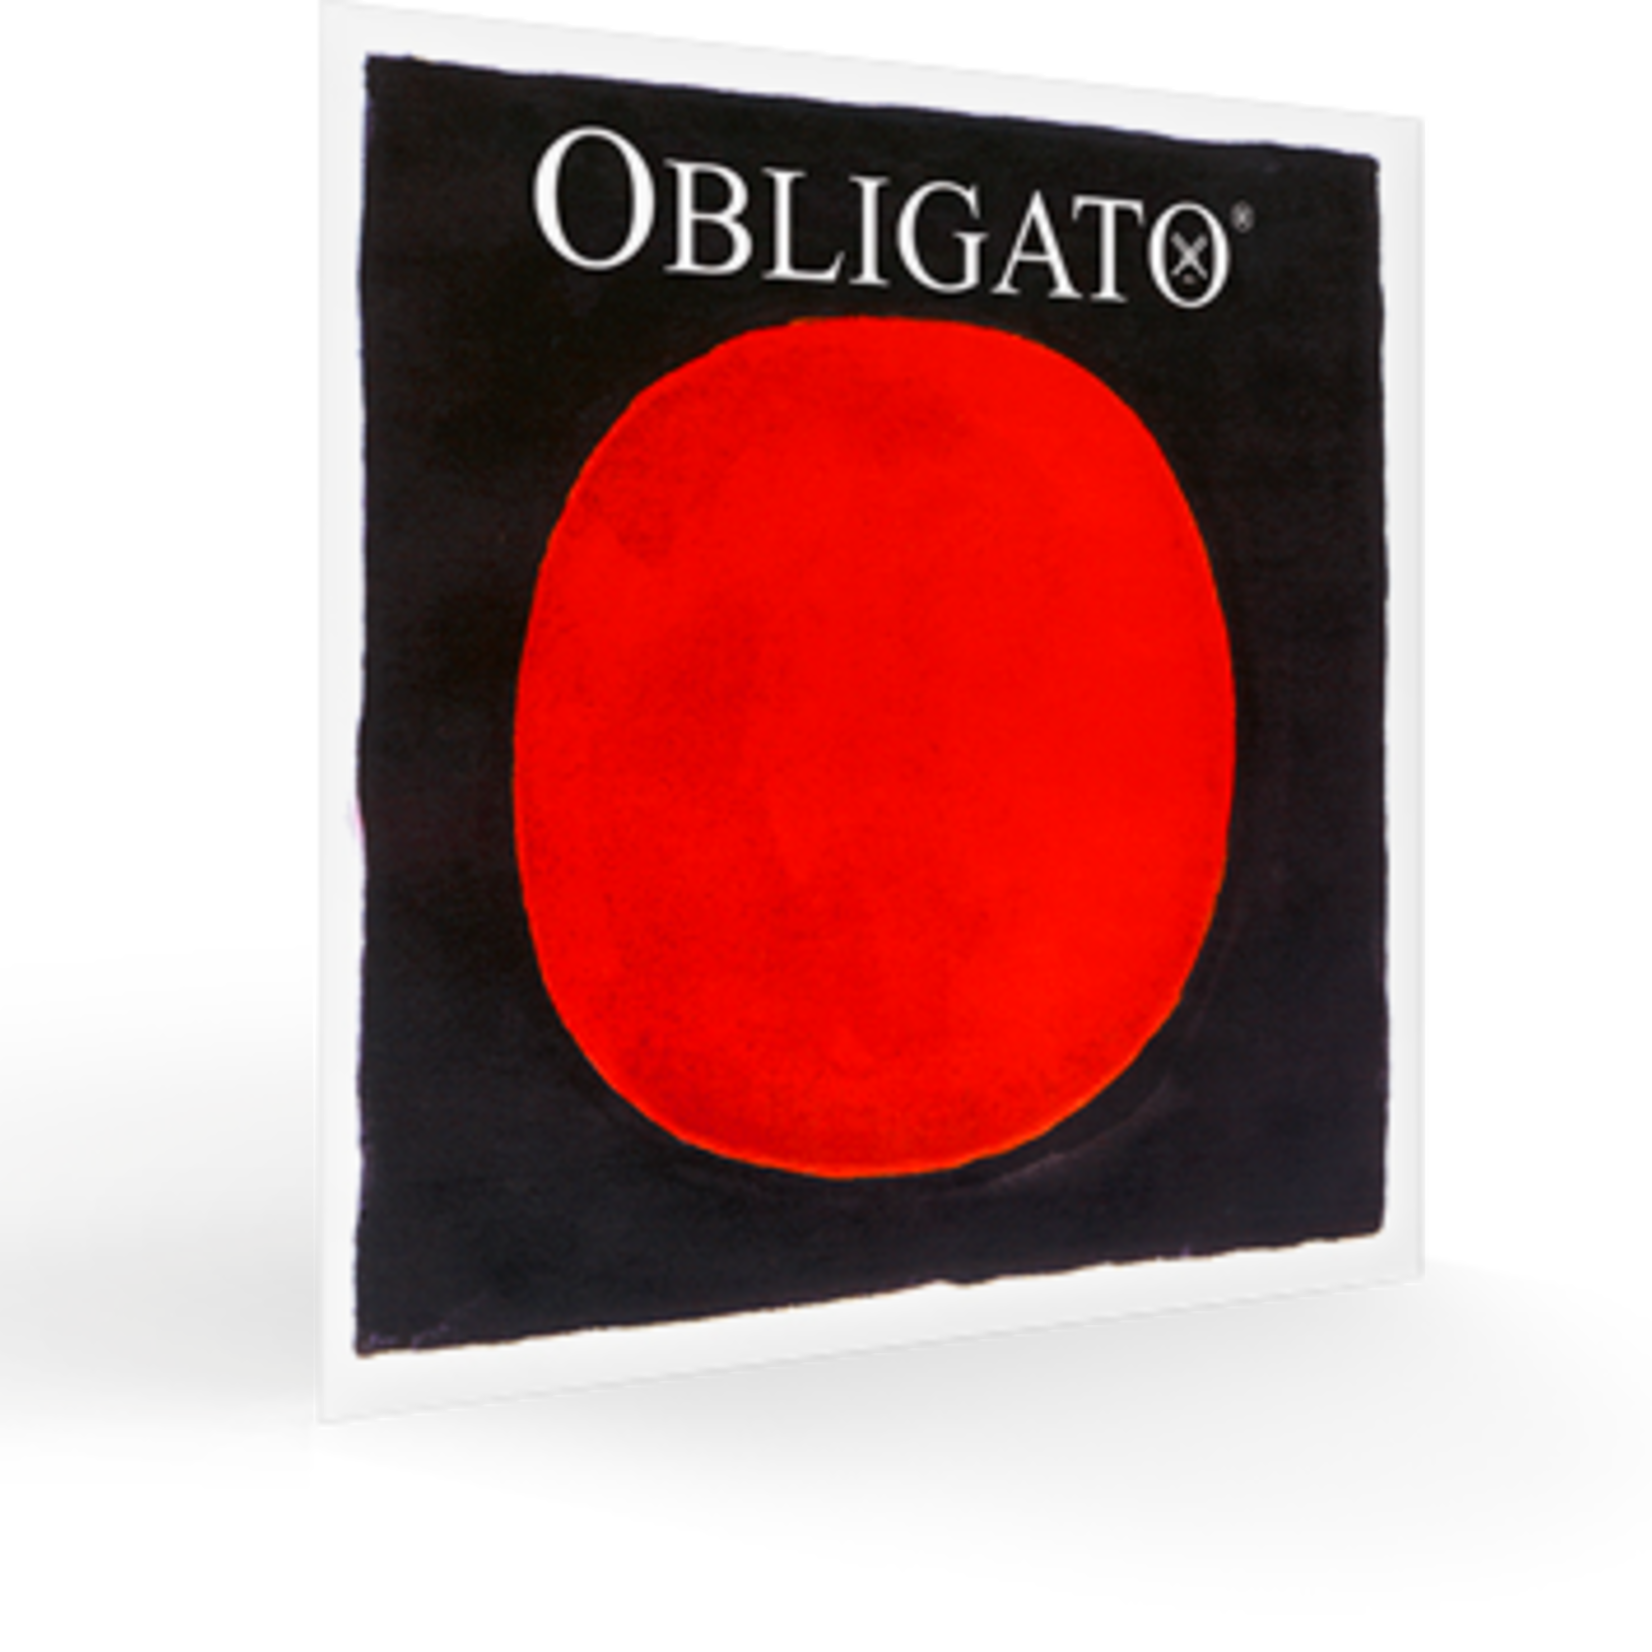 PIRASTRO Obligato Corde de violon, sol (g-4), 4/4, synthétique, argent